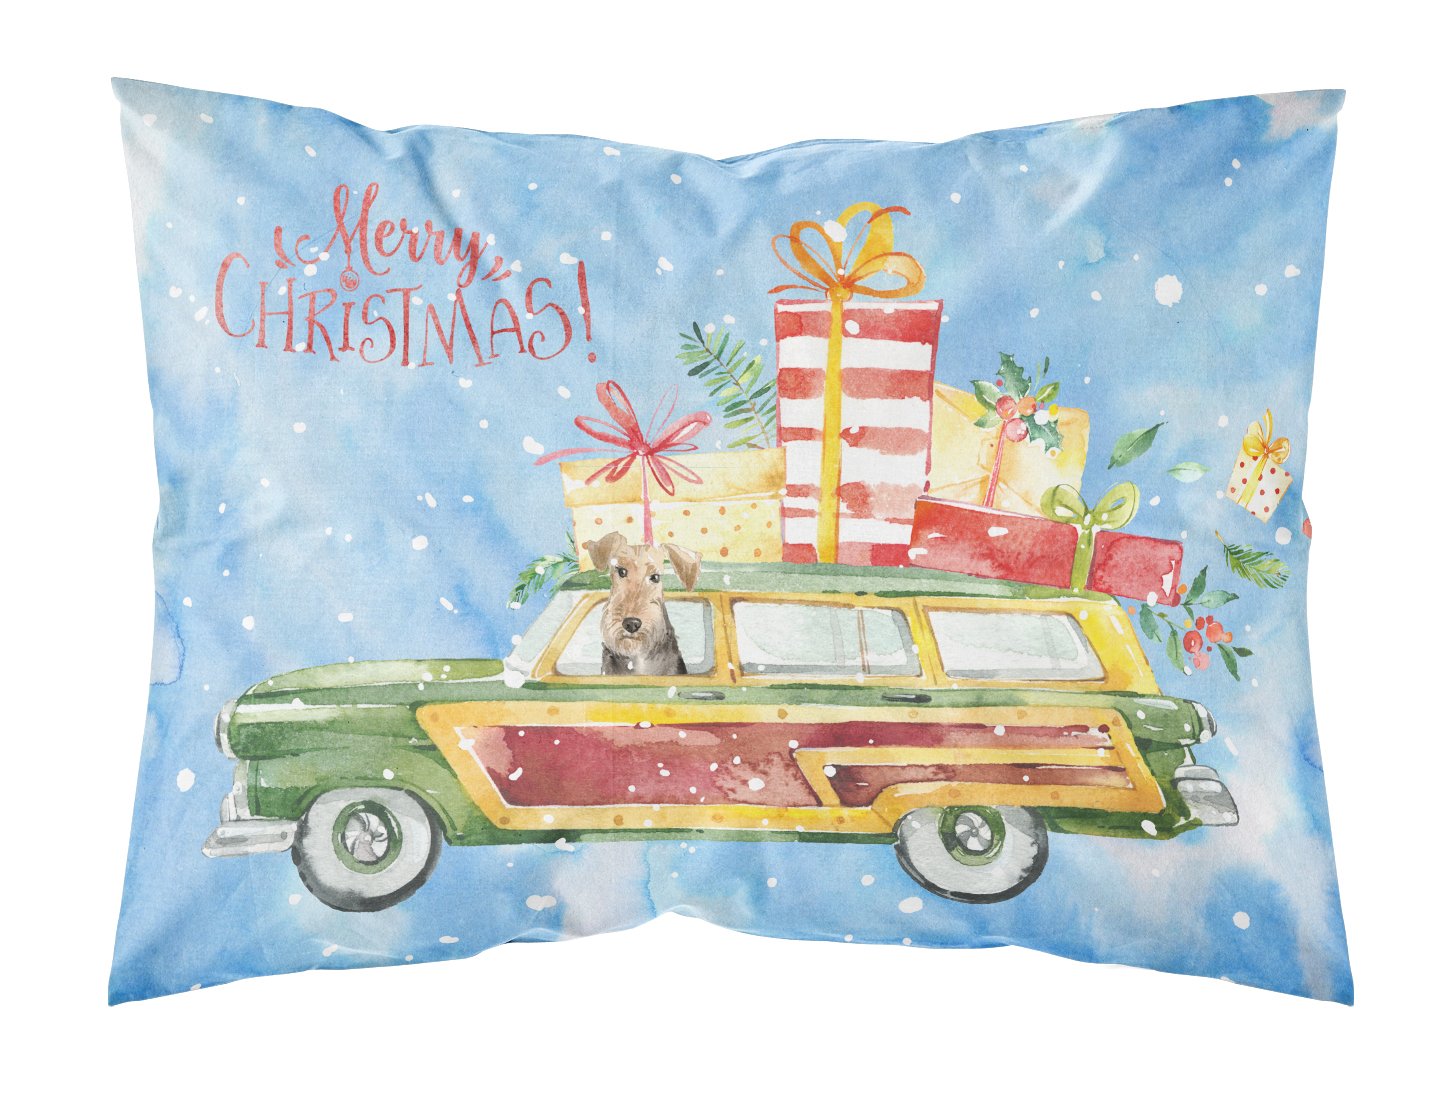 Merry Christmas Welsh Terrier Fabric Standard Pillowcase CK2427PILLOWCASE by Caroline's Treasures